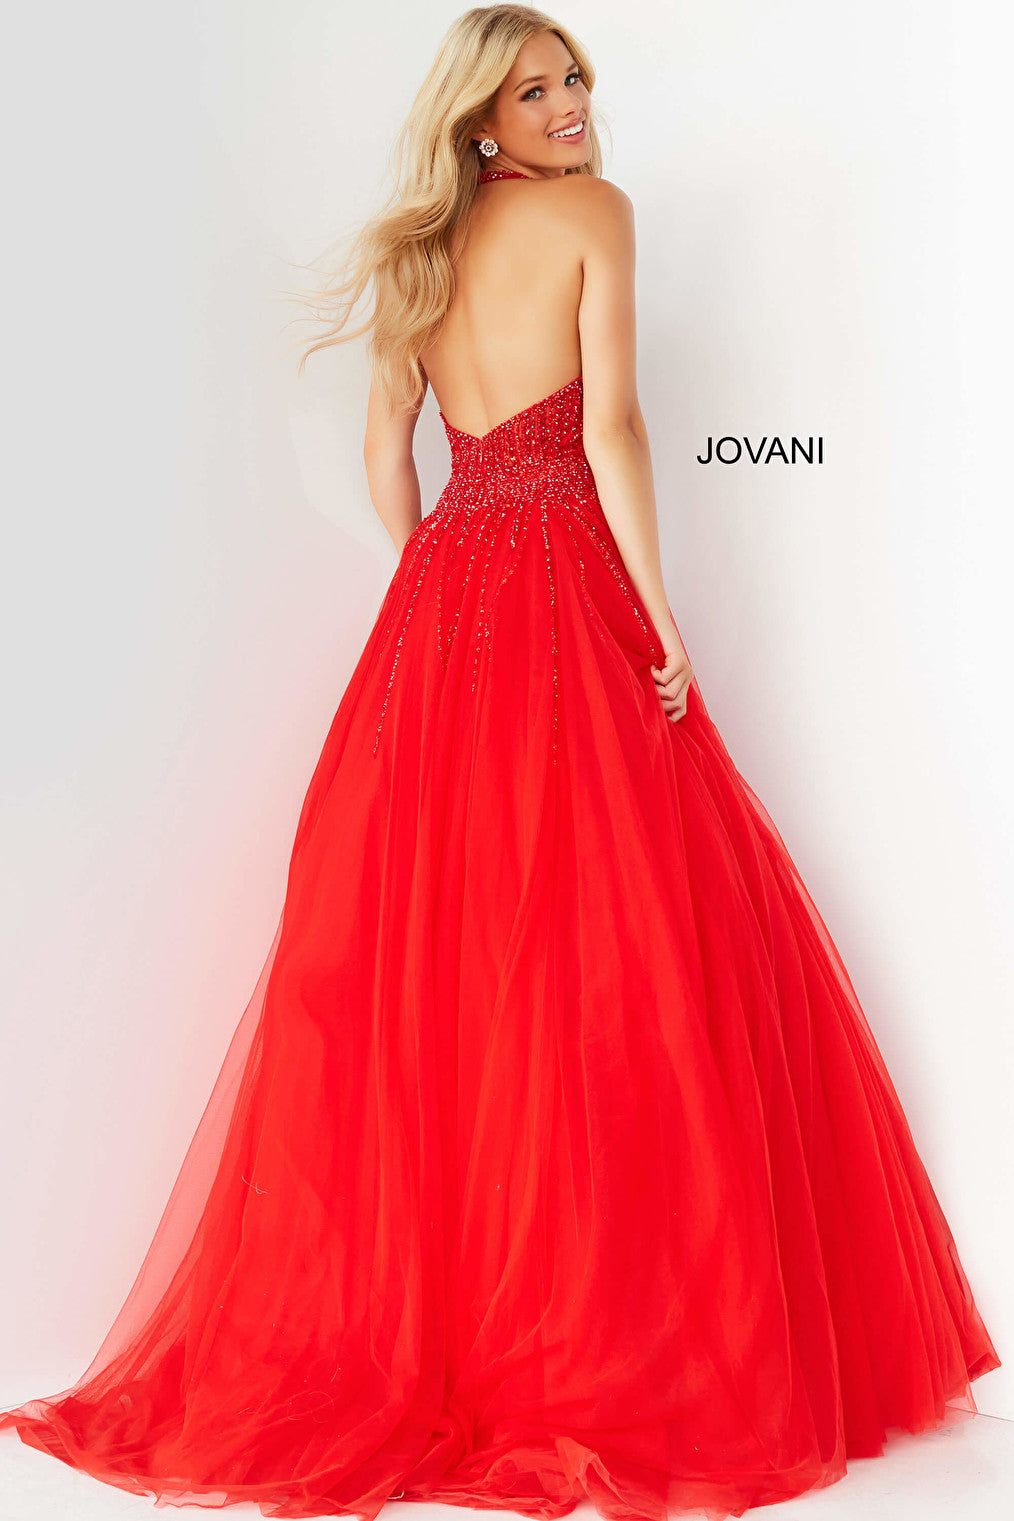 Sexy red prom ballgown Jovani 06598